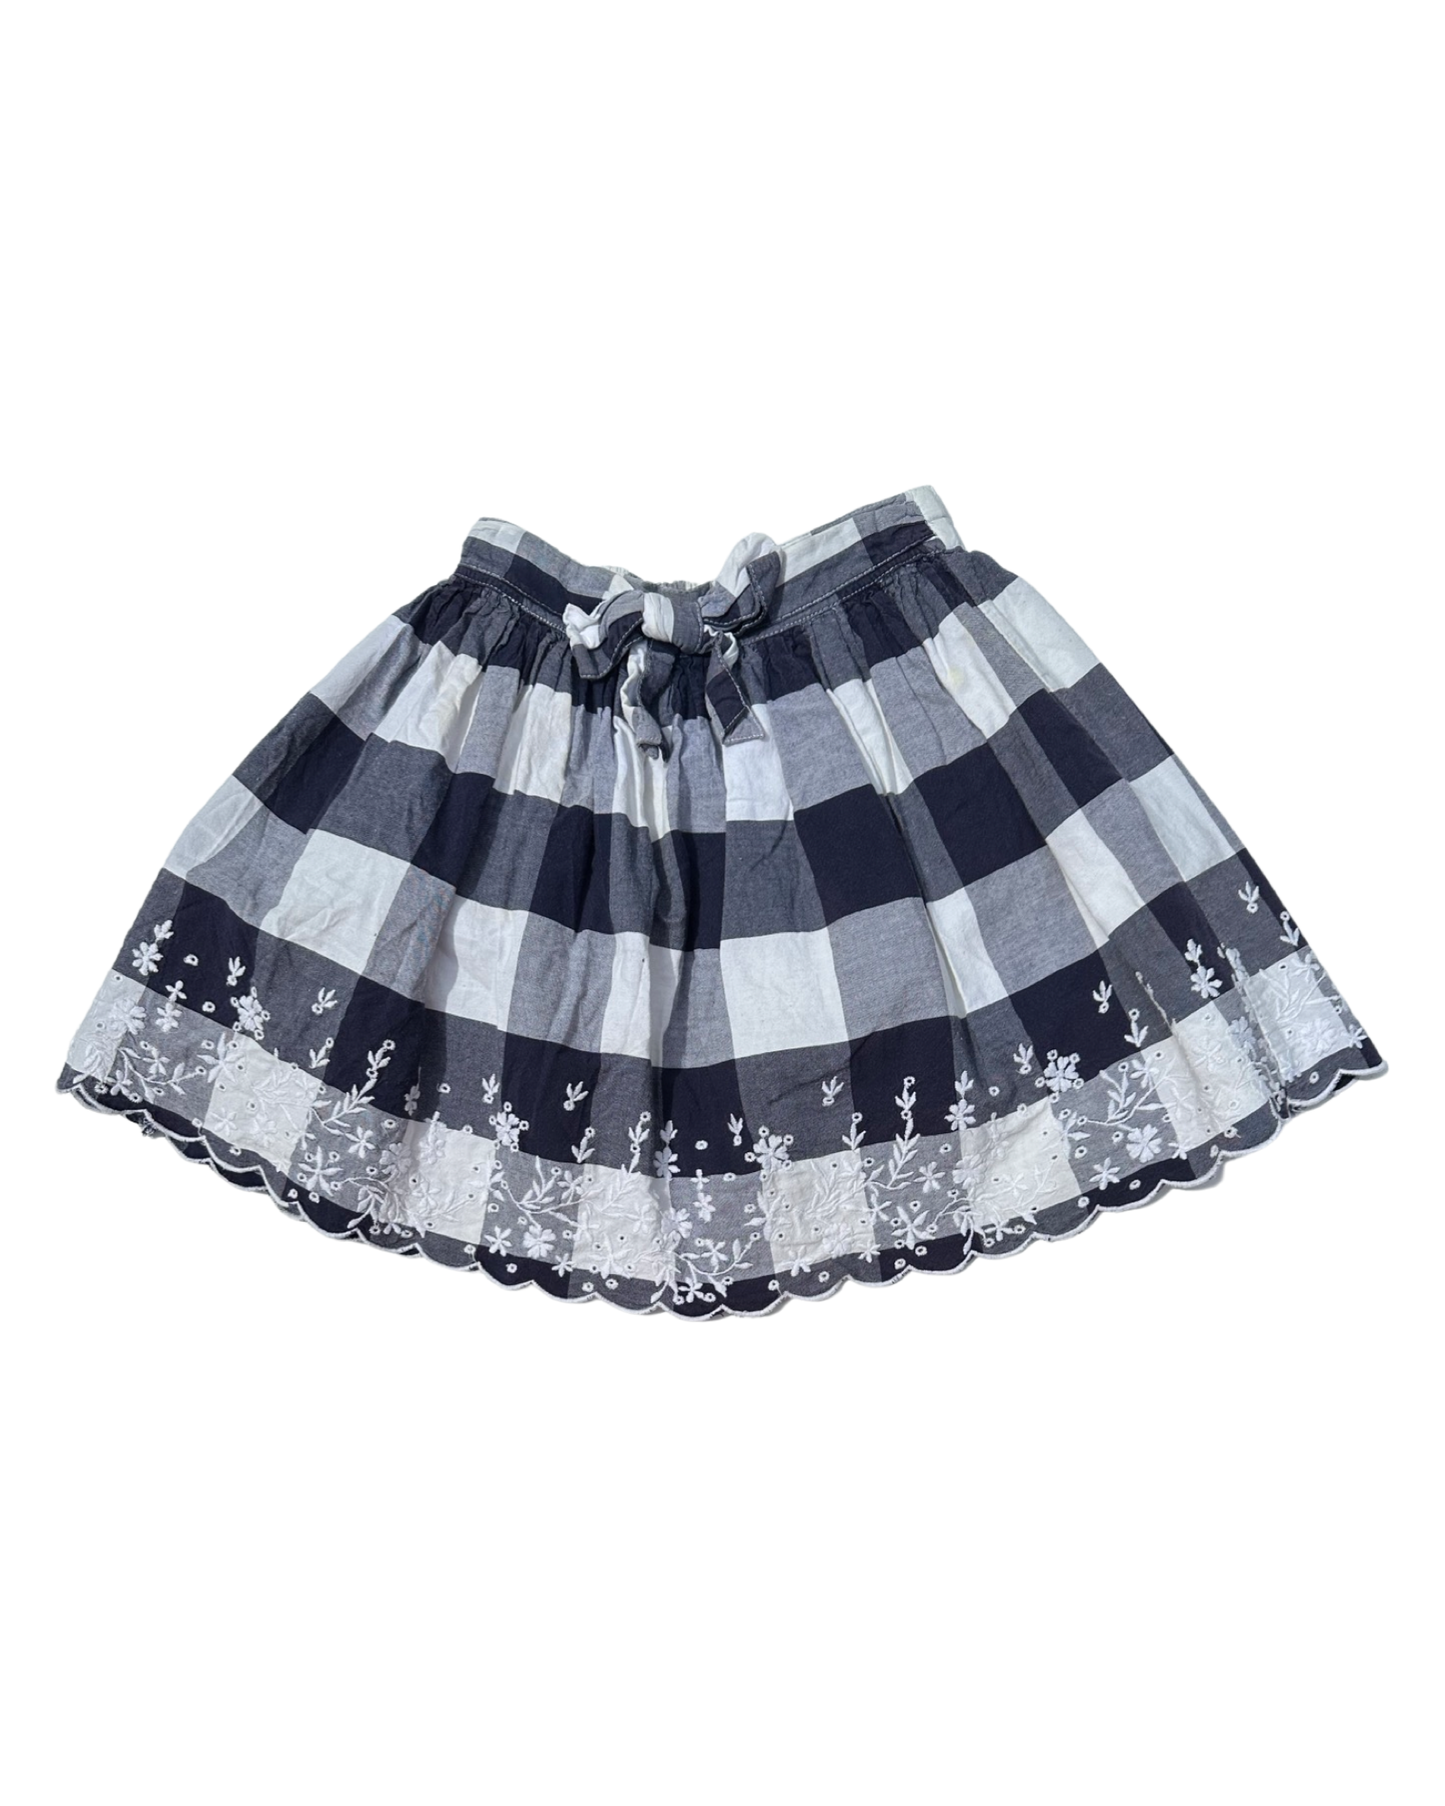 Next vintage checked cotton skirt (size 2-3yrs)